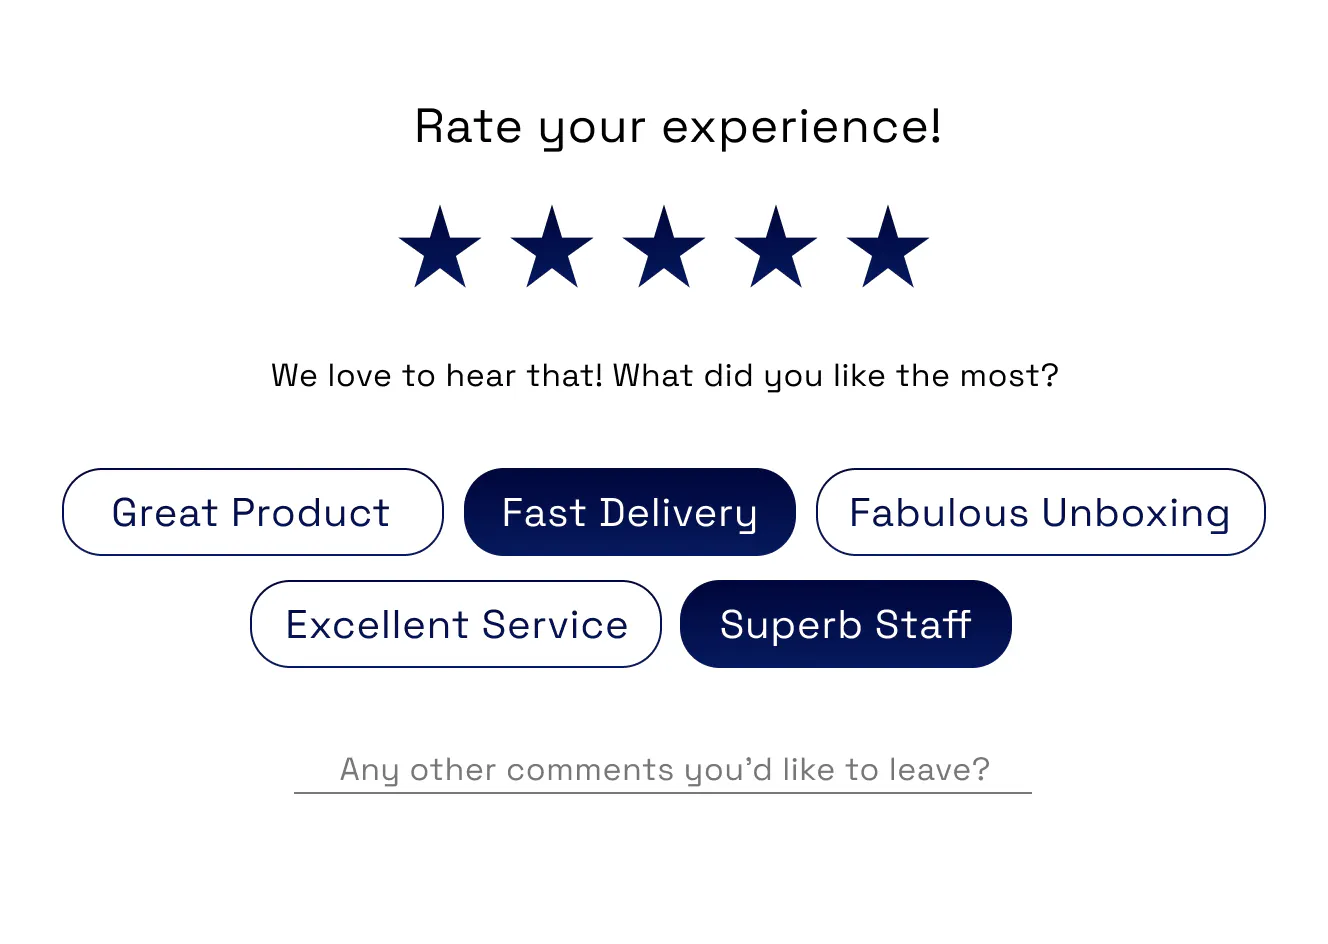 Gather customer feedback in real time